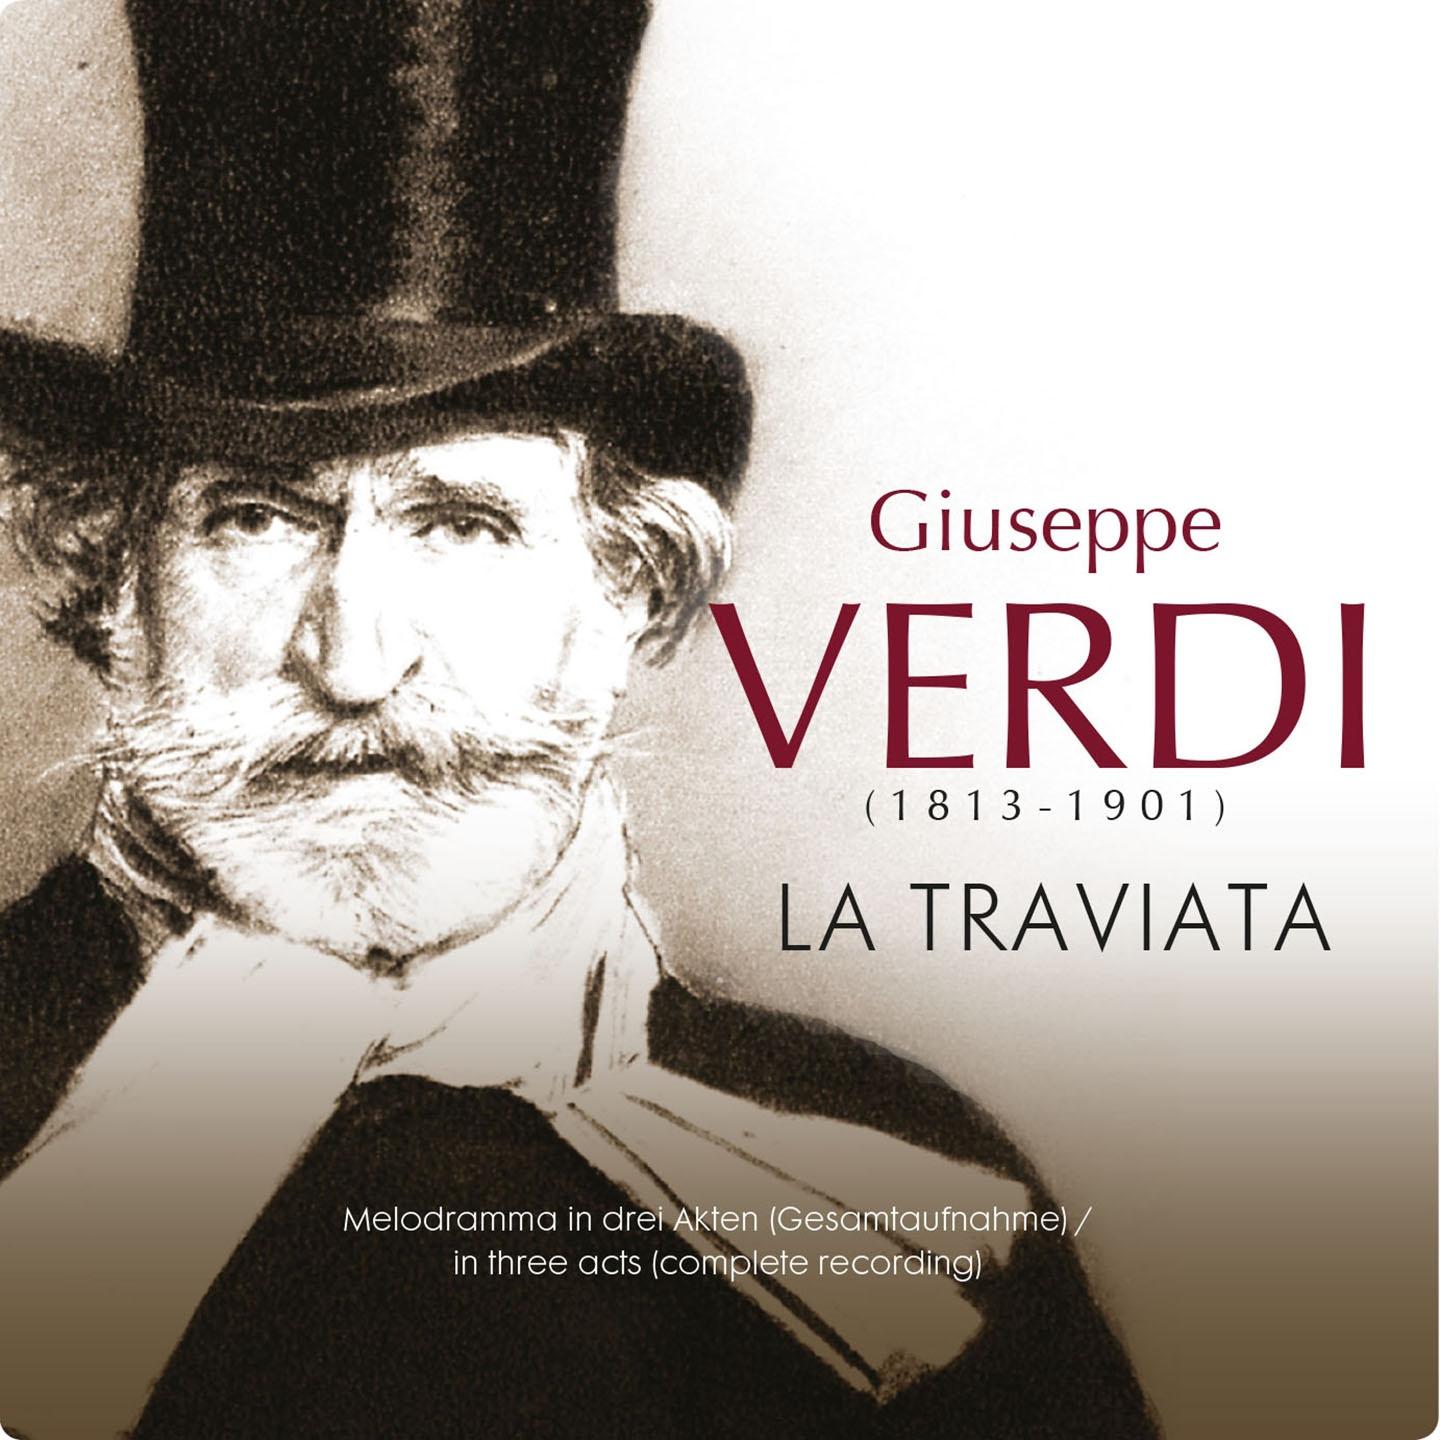 La Traviata, Act III: "Largo al quadrupede"